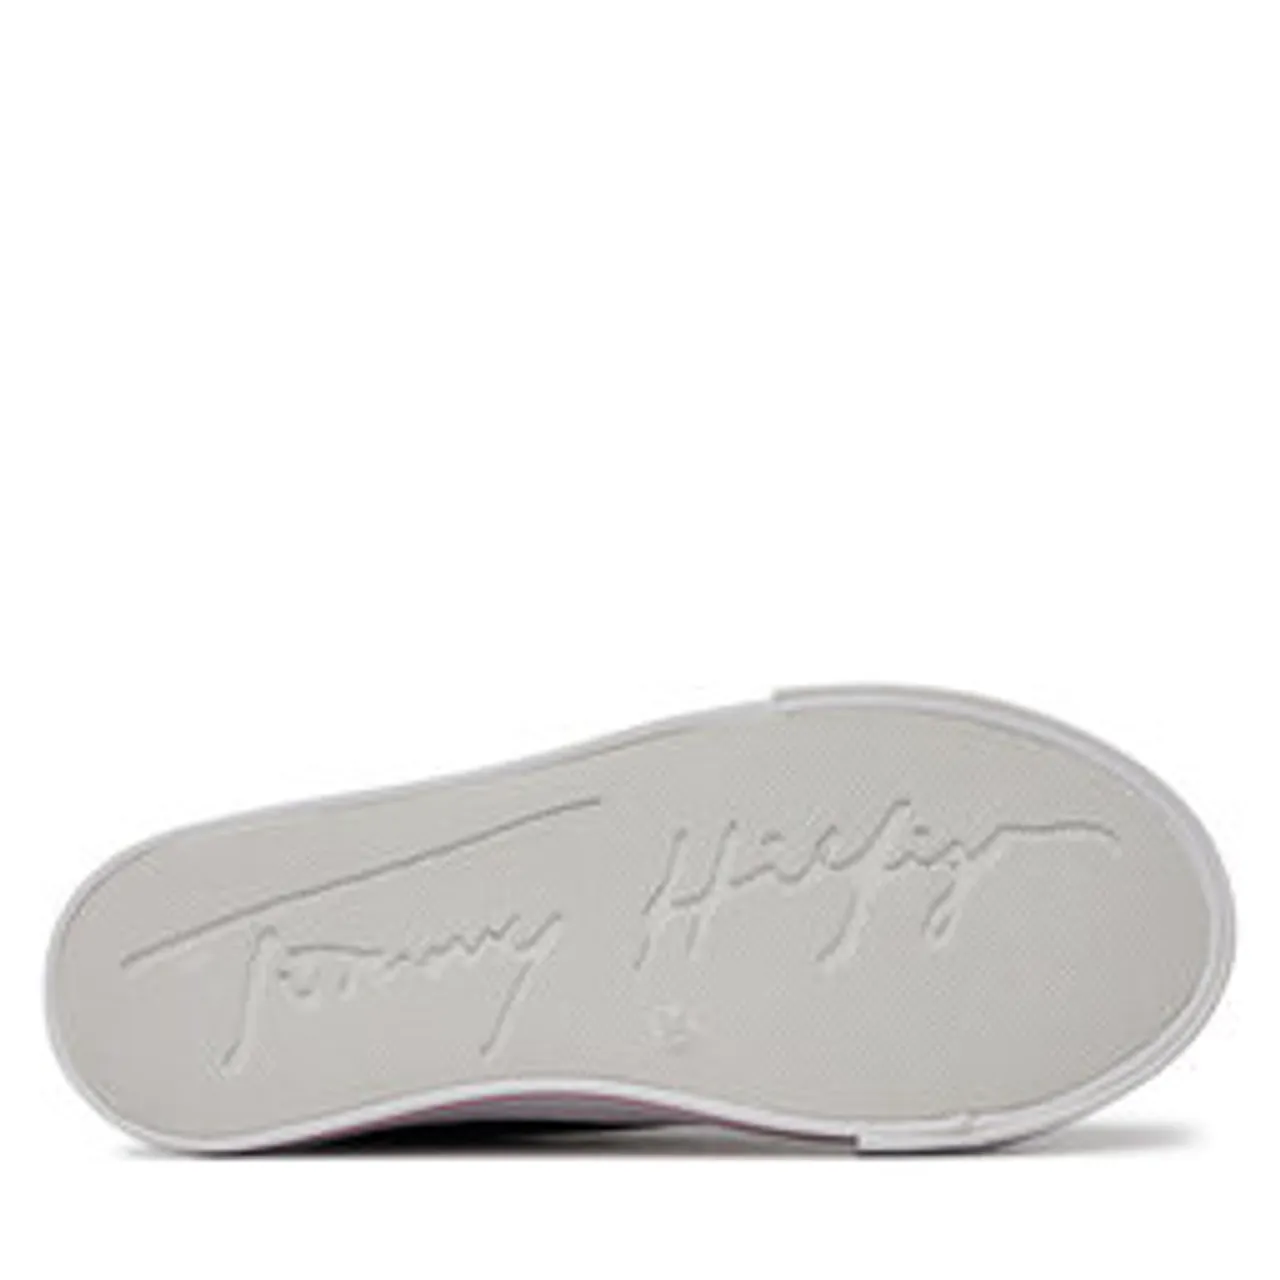 Sneakers aus Stoff Tommy Hilfiger Low Cut Lace-Up Sneaker T3A9-33185-1687 M Black 999